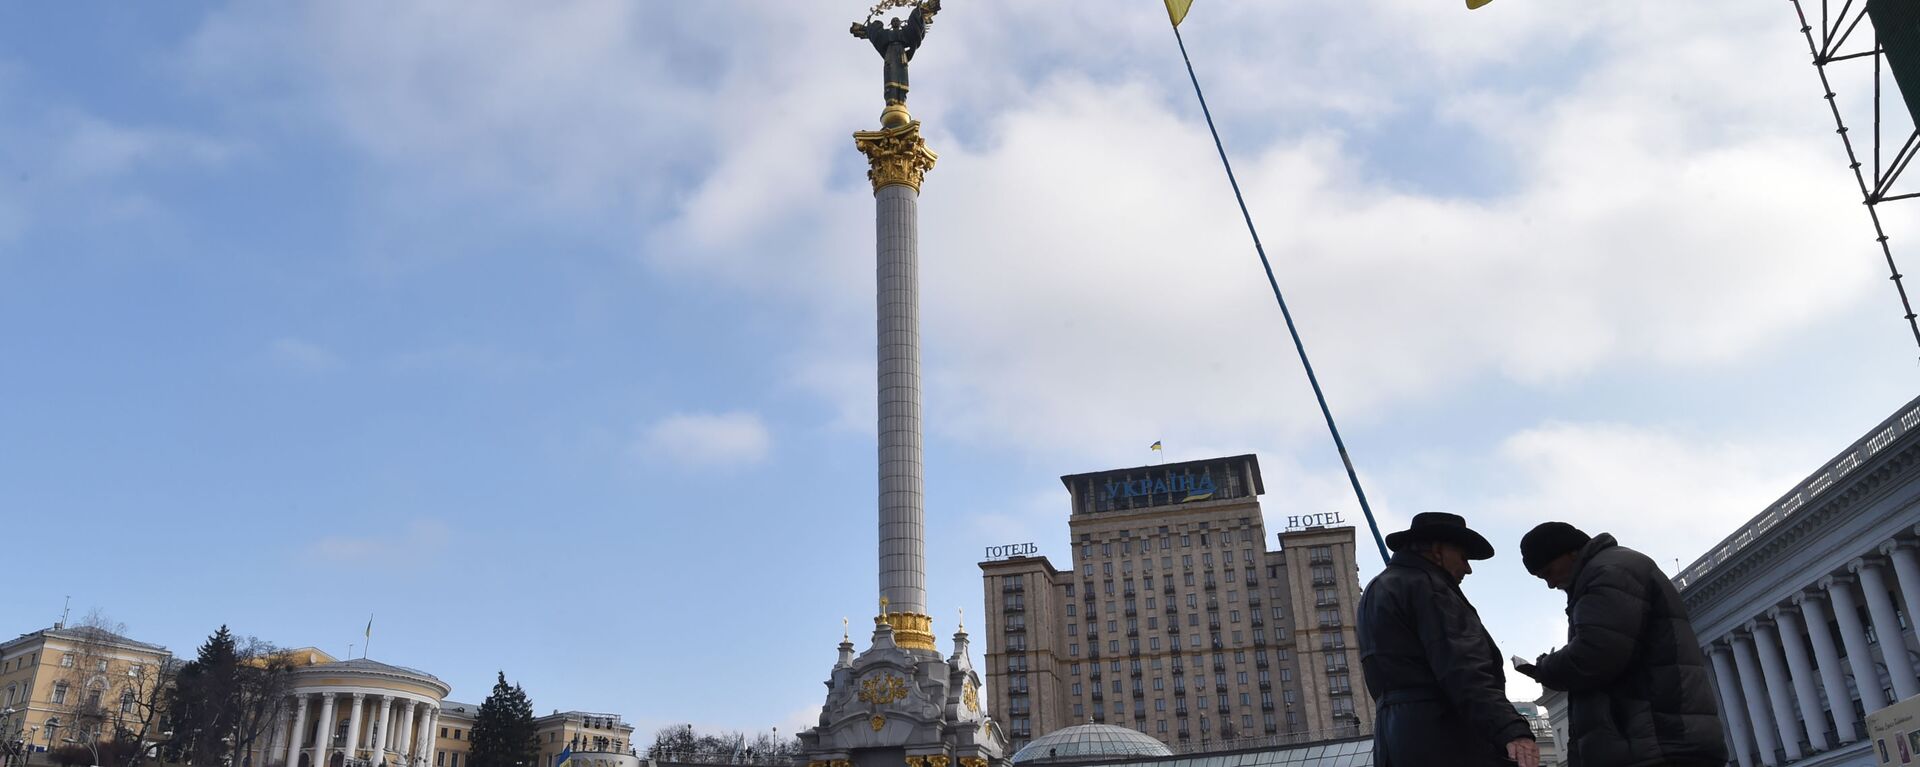 Украинский флаг на площади Независимости в Киеве - Sputnik Узбекистан, 1920, 05.09.2021